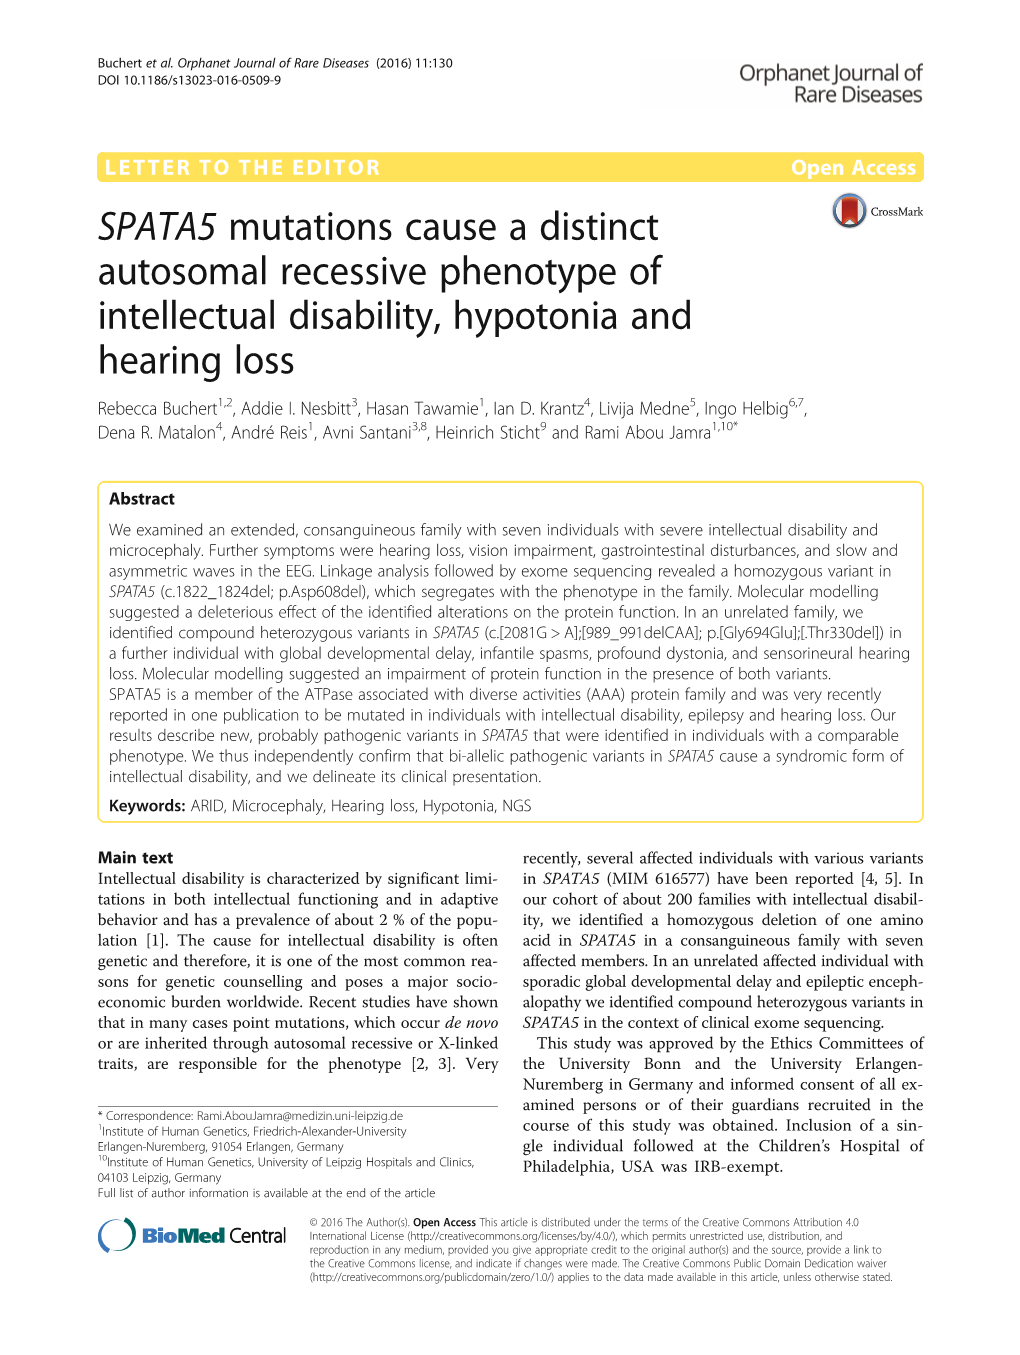 SPATA5 Mutations Cause a Distinct Autosomal Recessive Phenotype of Intellectual Disability, Hypotonia and Hearing Loss Rebecca Buchert1,2, Addie I